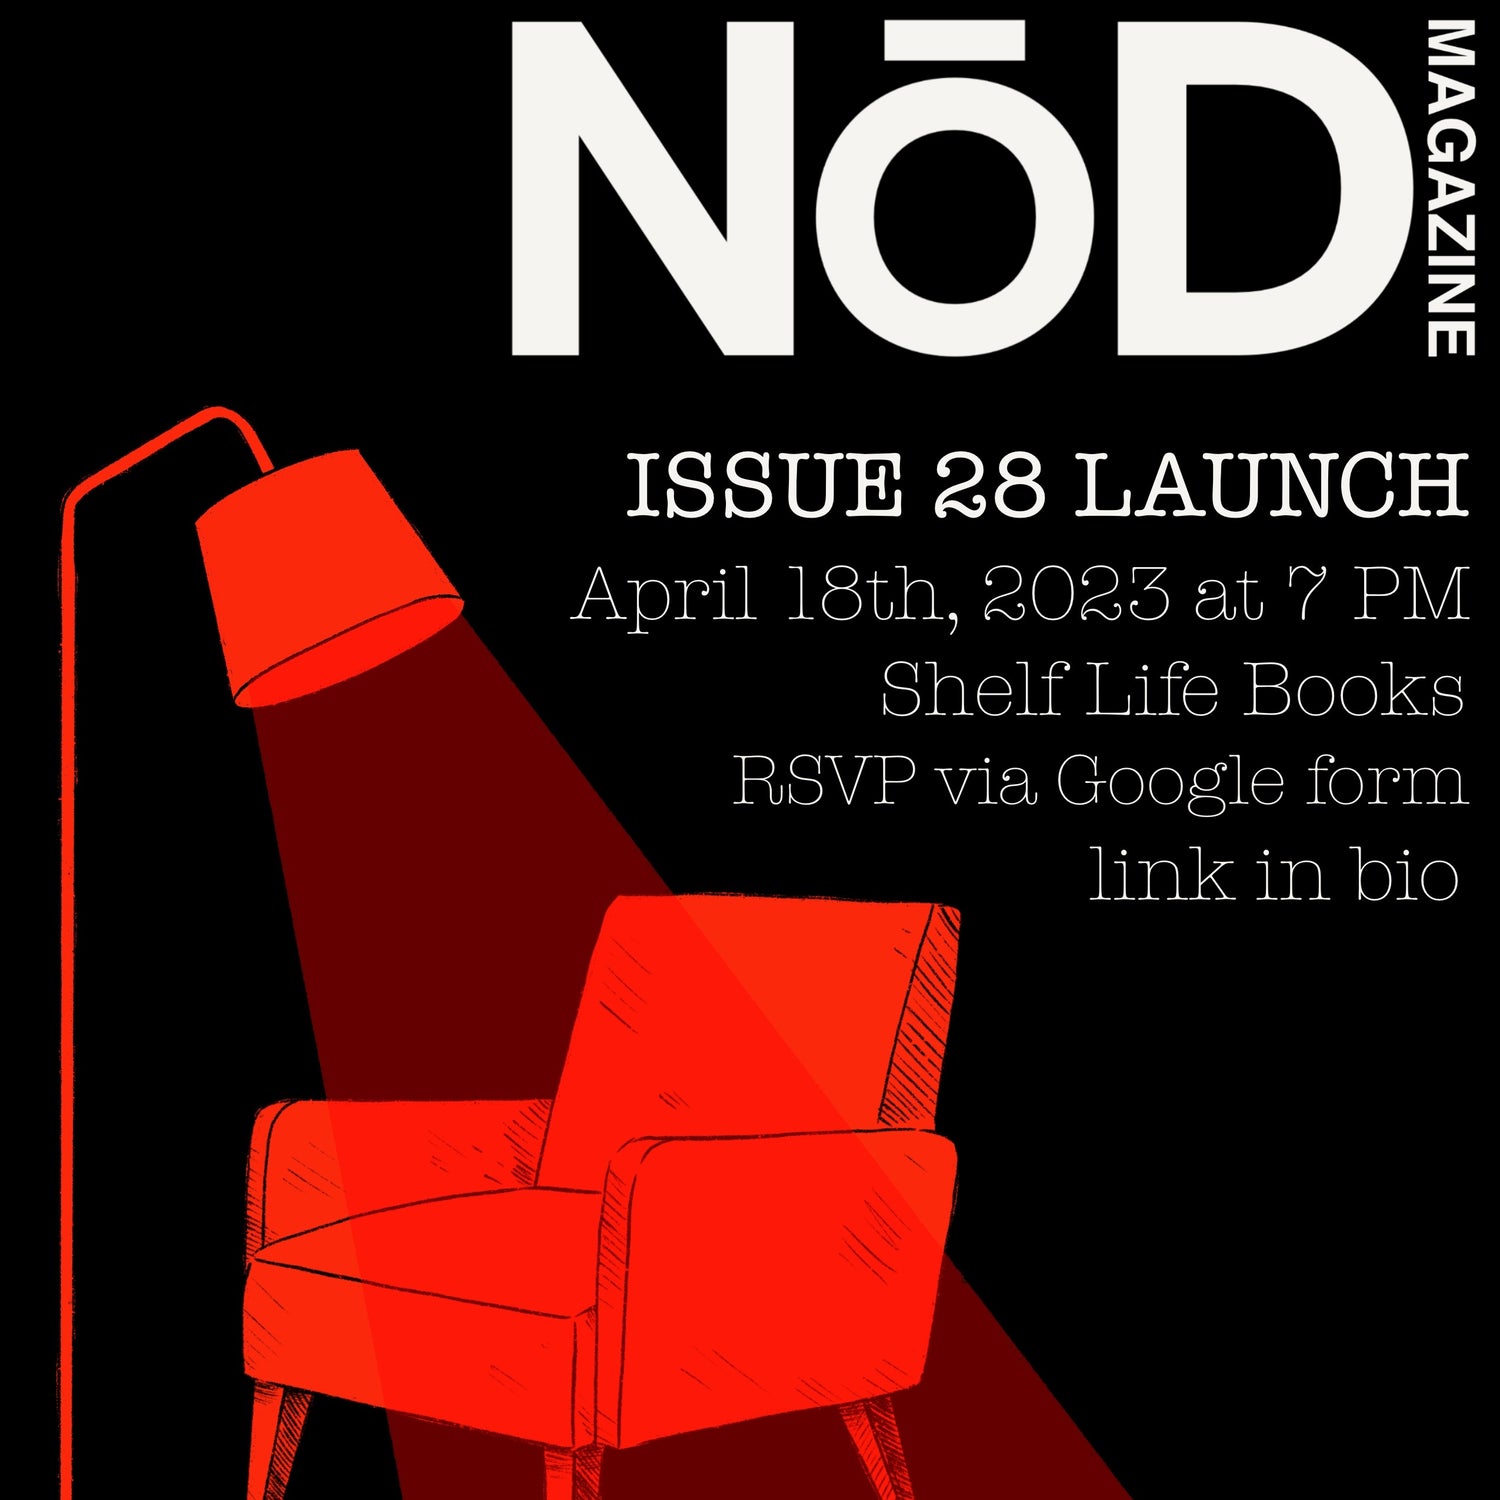 Artwork for Nod Magazine at the University of Calgary